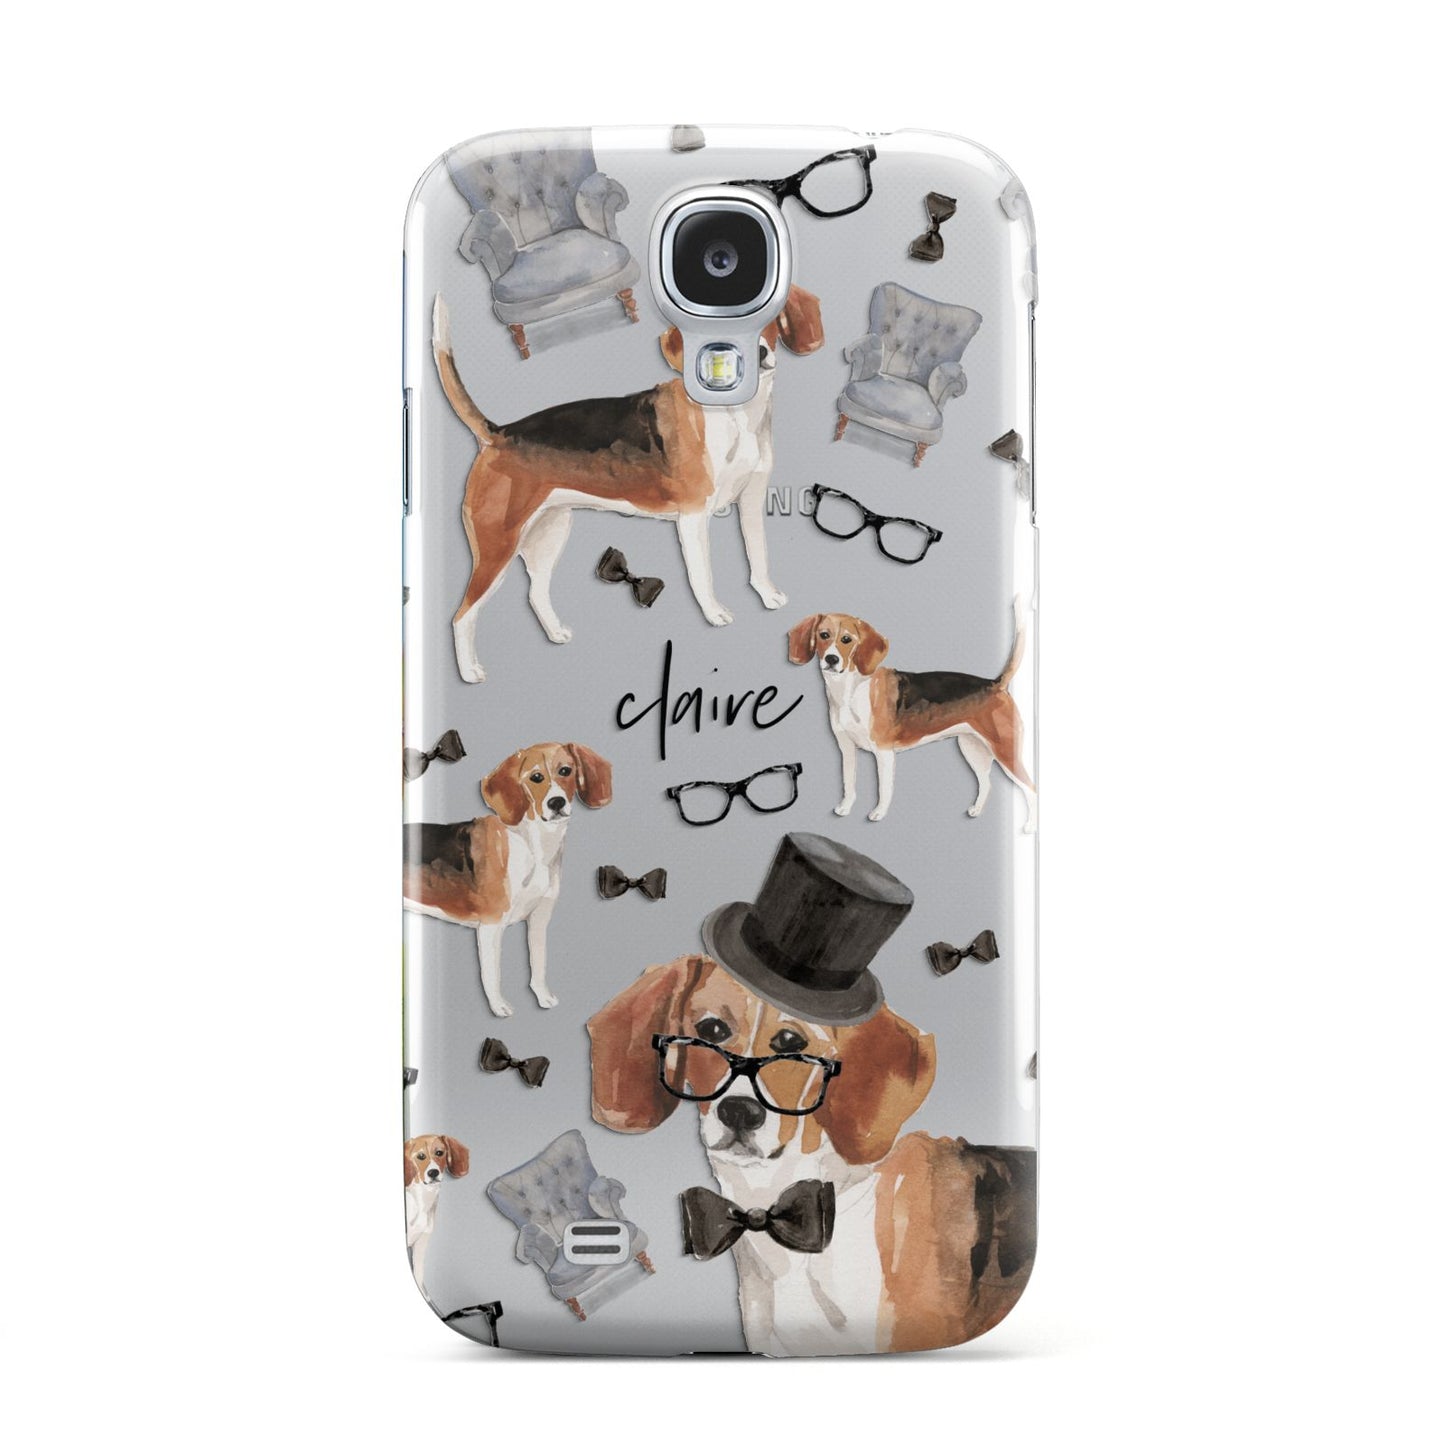 Personalised Beagle Dog Samsung Galaxy S4 Case